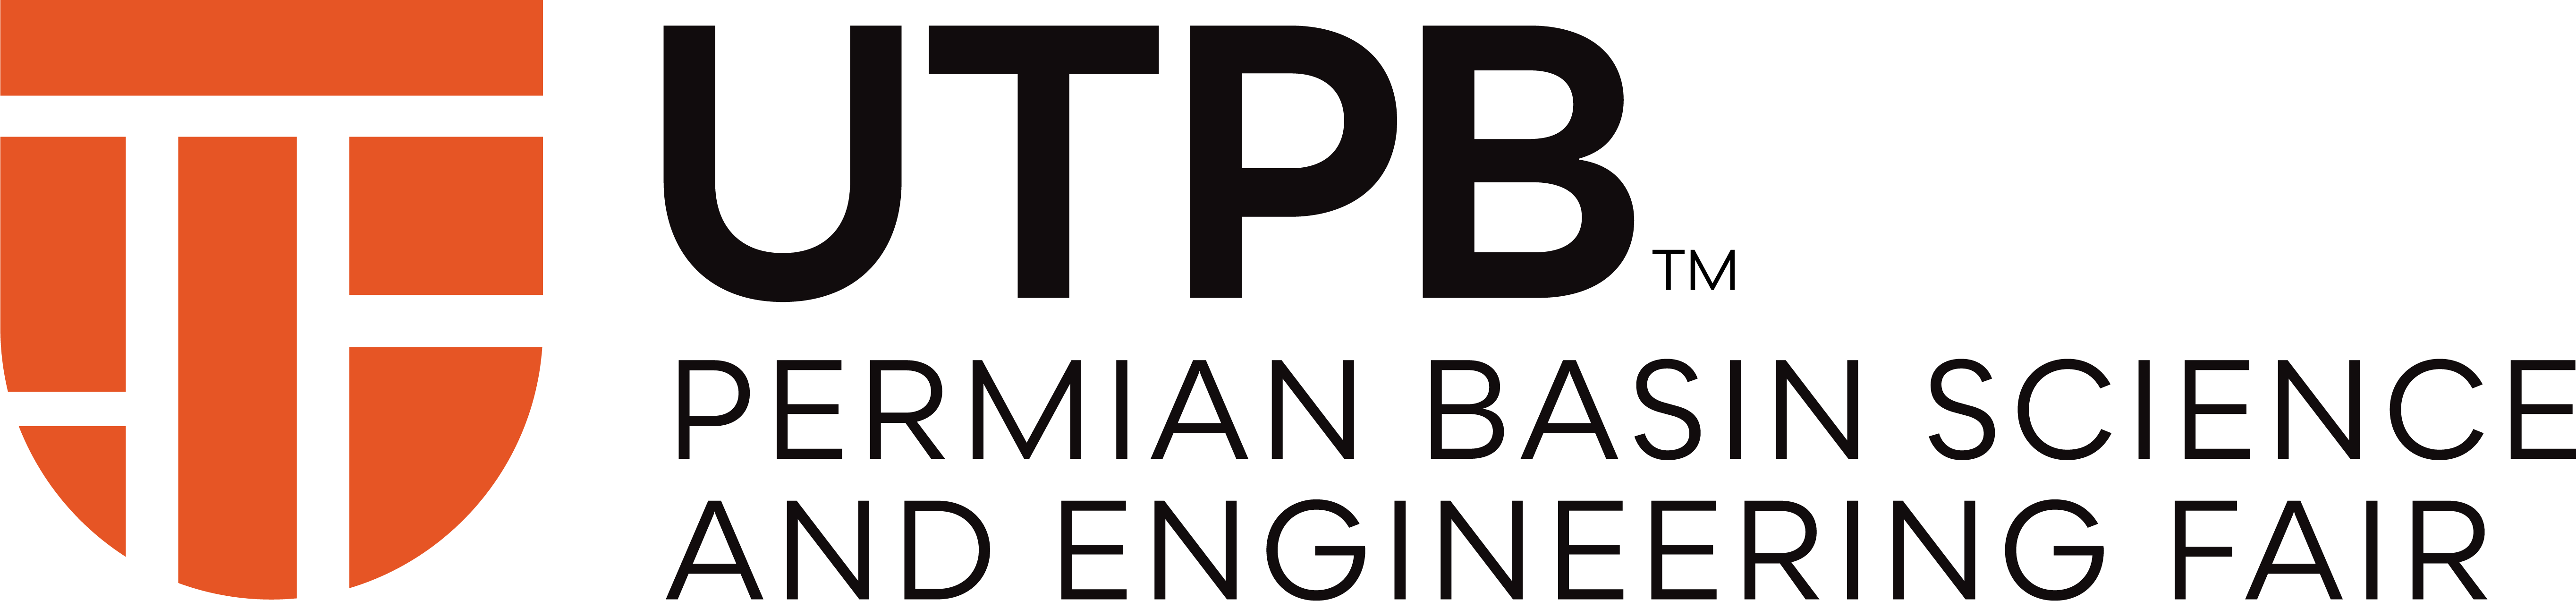 UTPB Permian Basin Science and Engineering Fair Logo